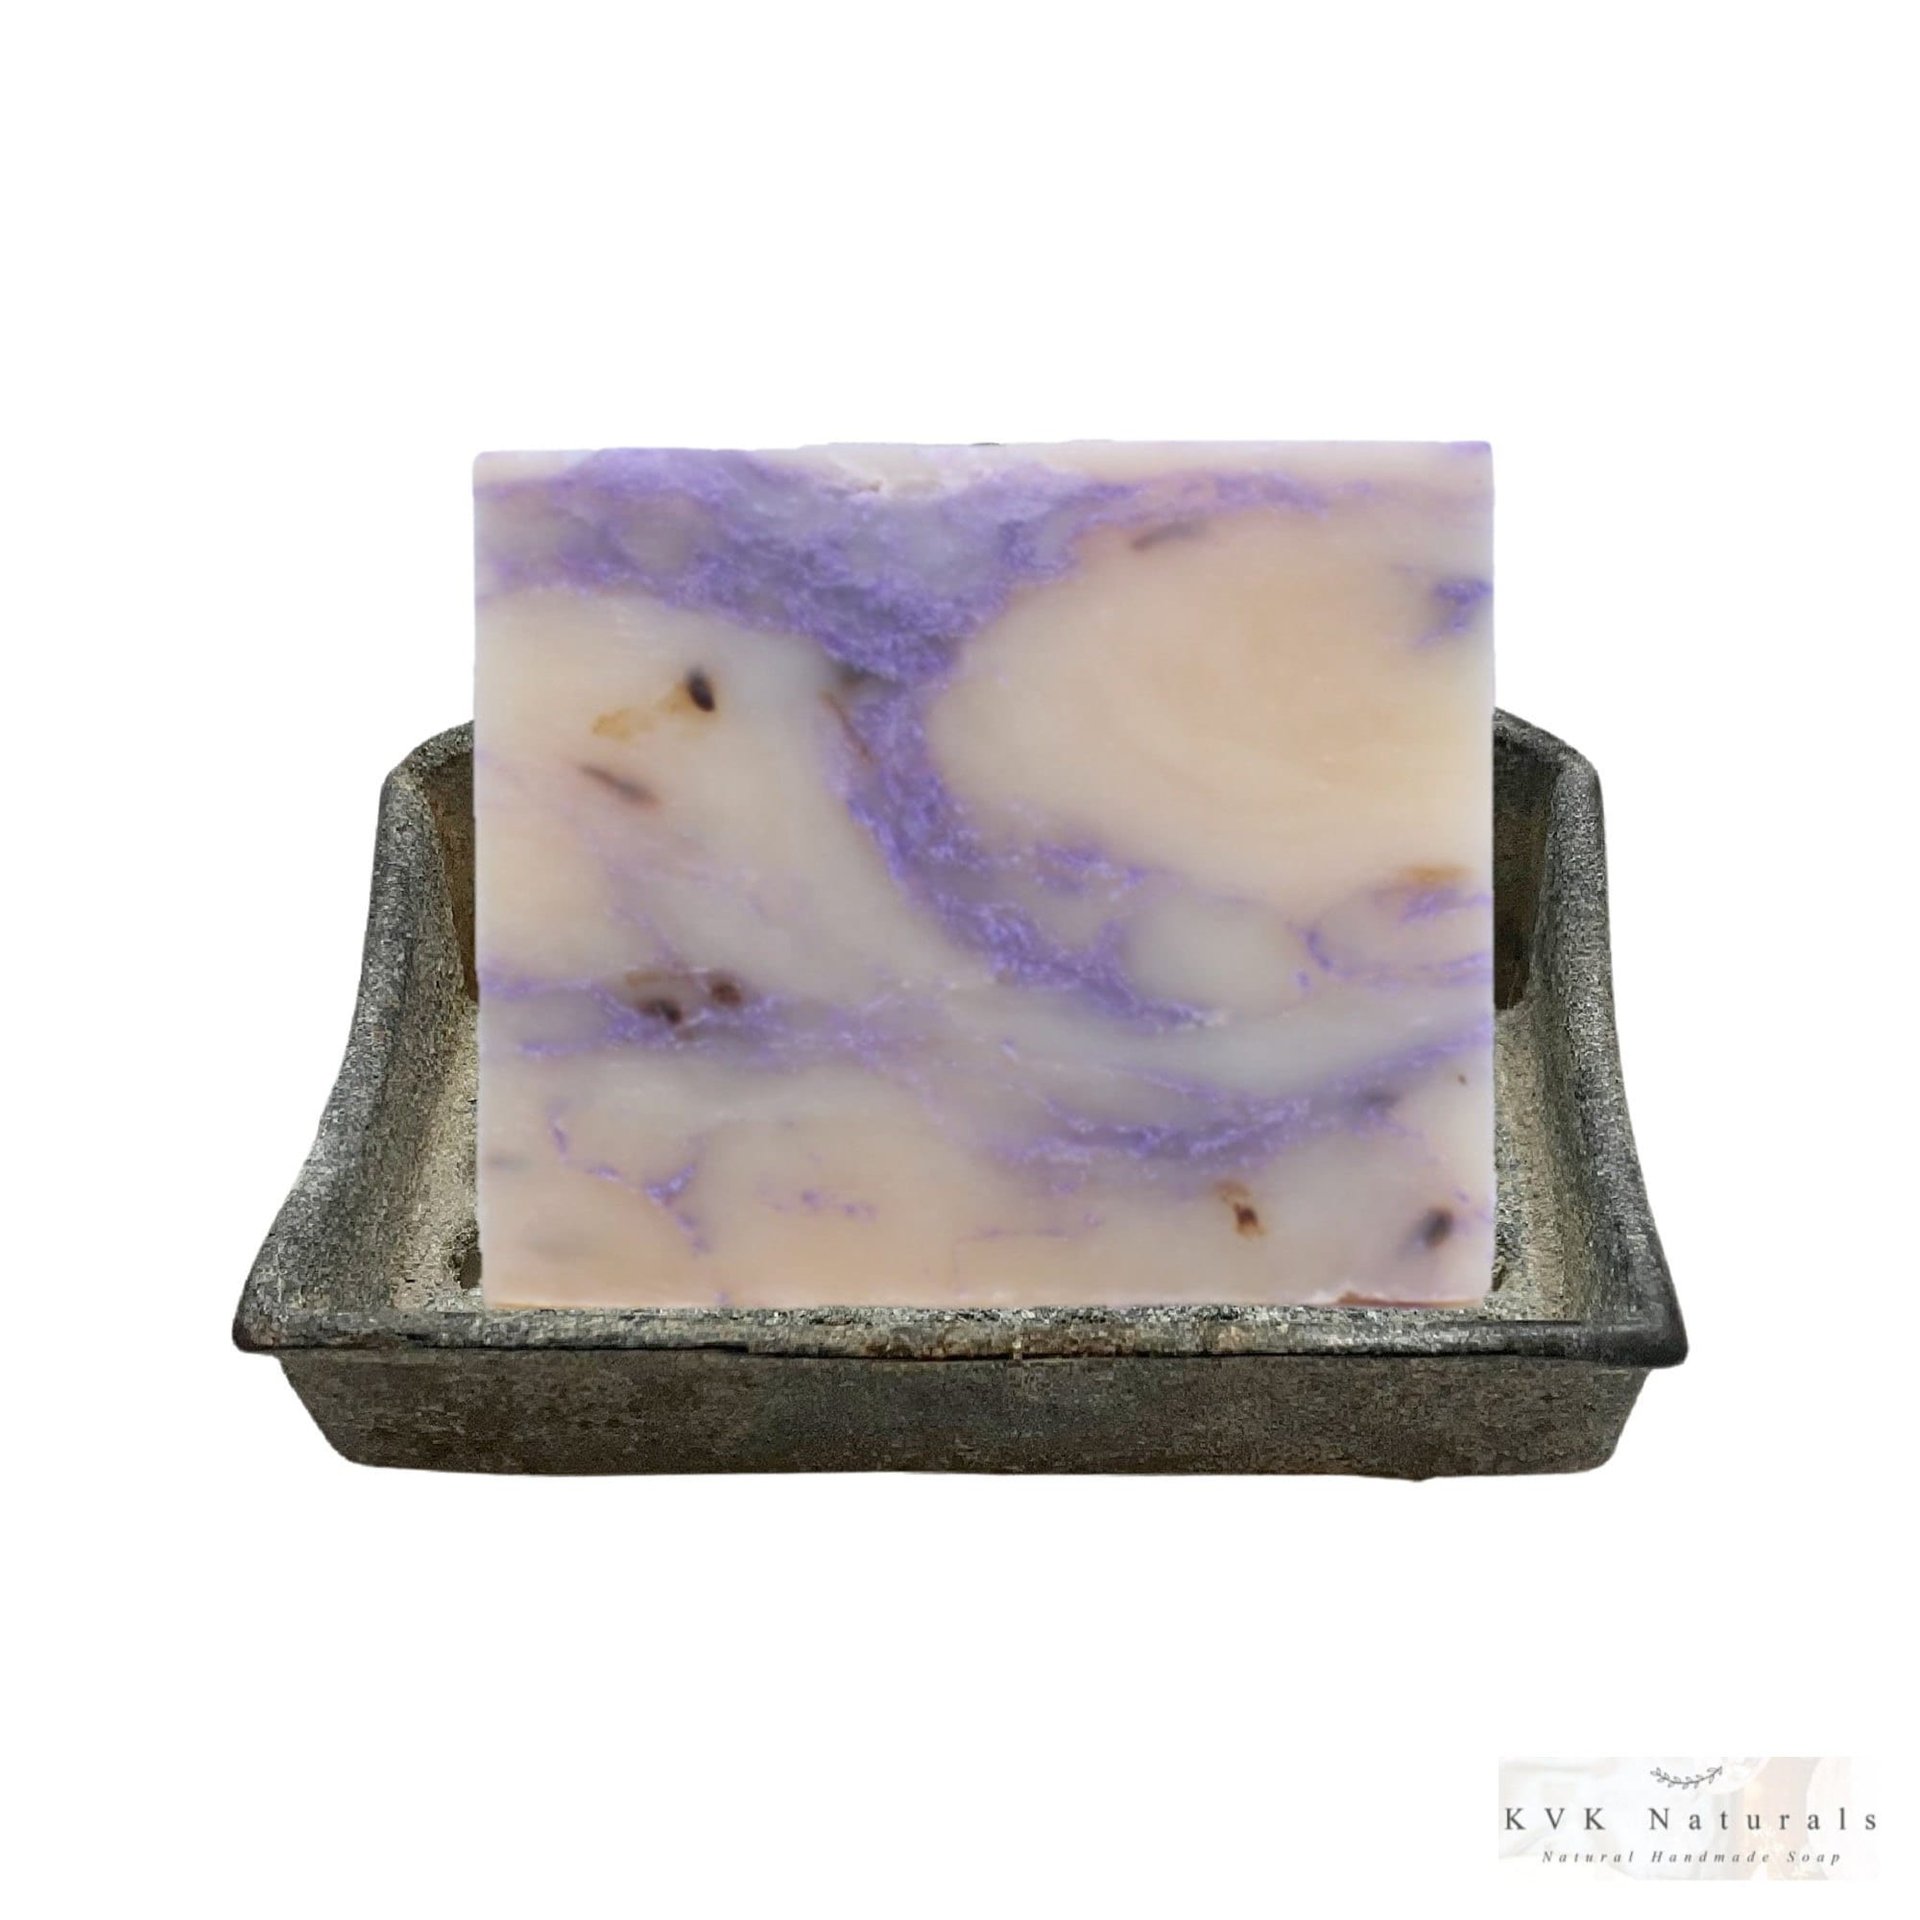 Lavender Flowers Soap Bar - Handmade Soap, Natural Soap, Organic Soap, Cold Process Soap